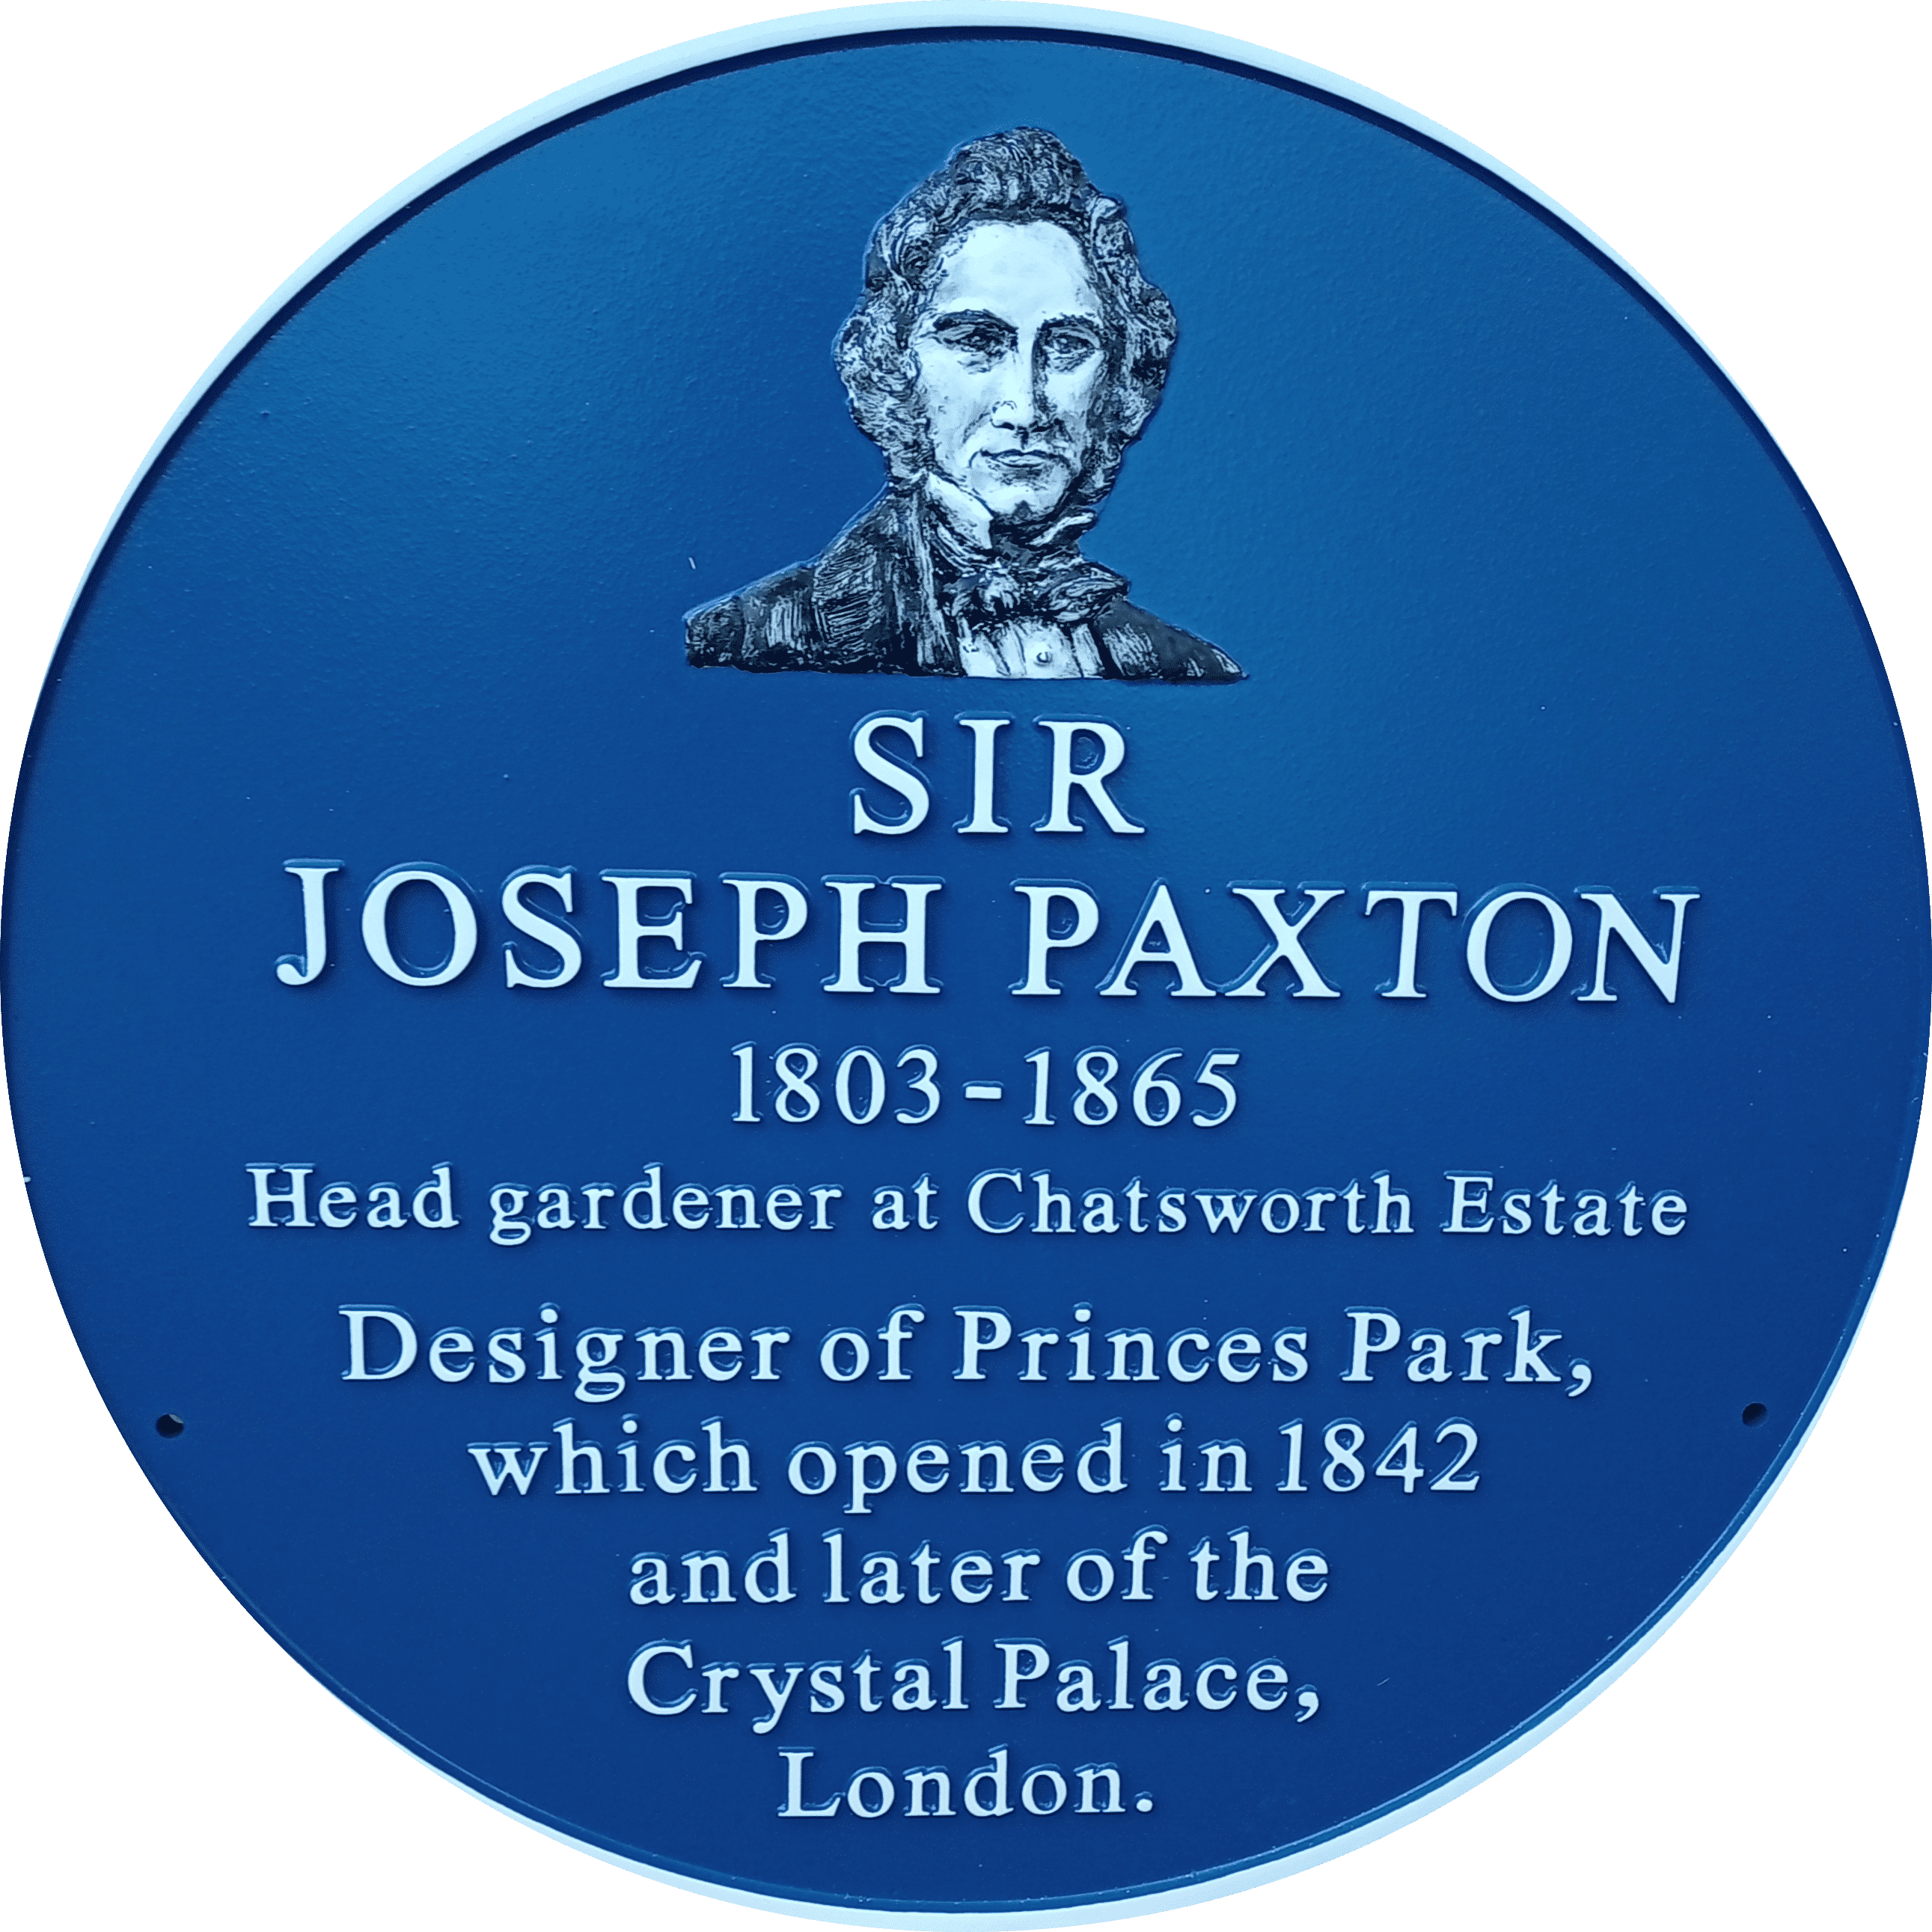 Thank you, Sir Joseph Paxton,